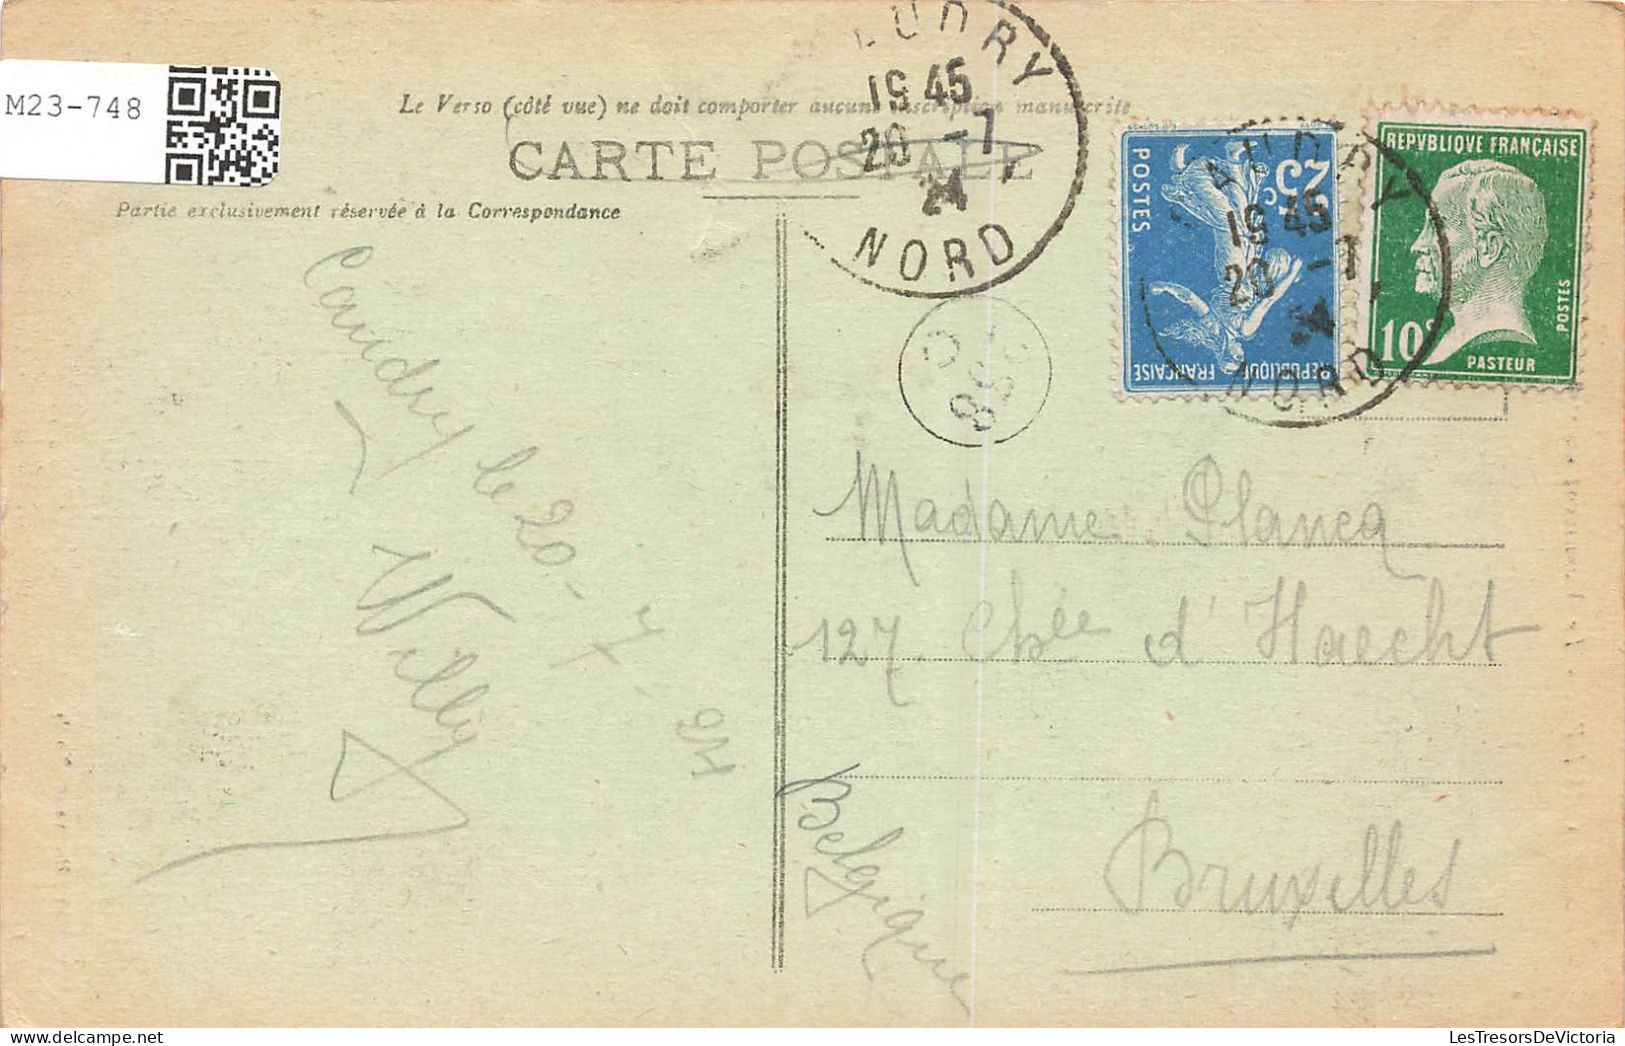 FRANCE - Caudry - Le Monument Du "Star Club"  - Carte Postale - Caudry